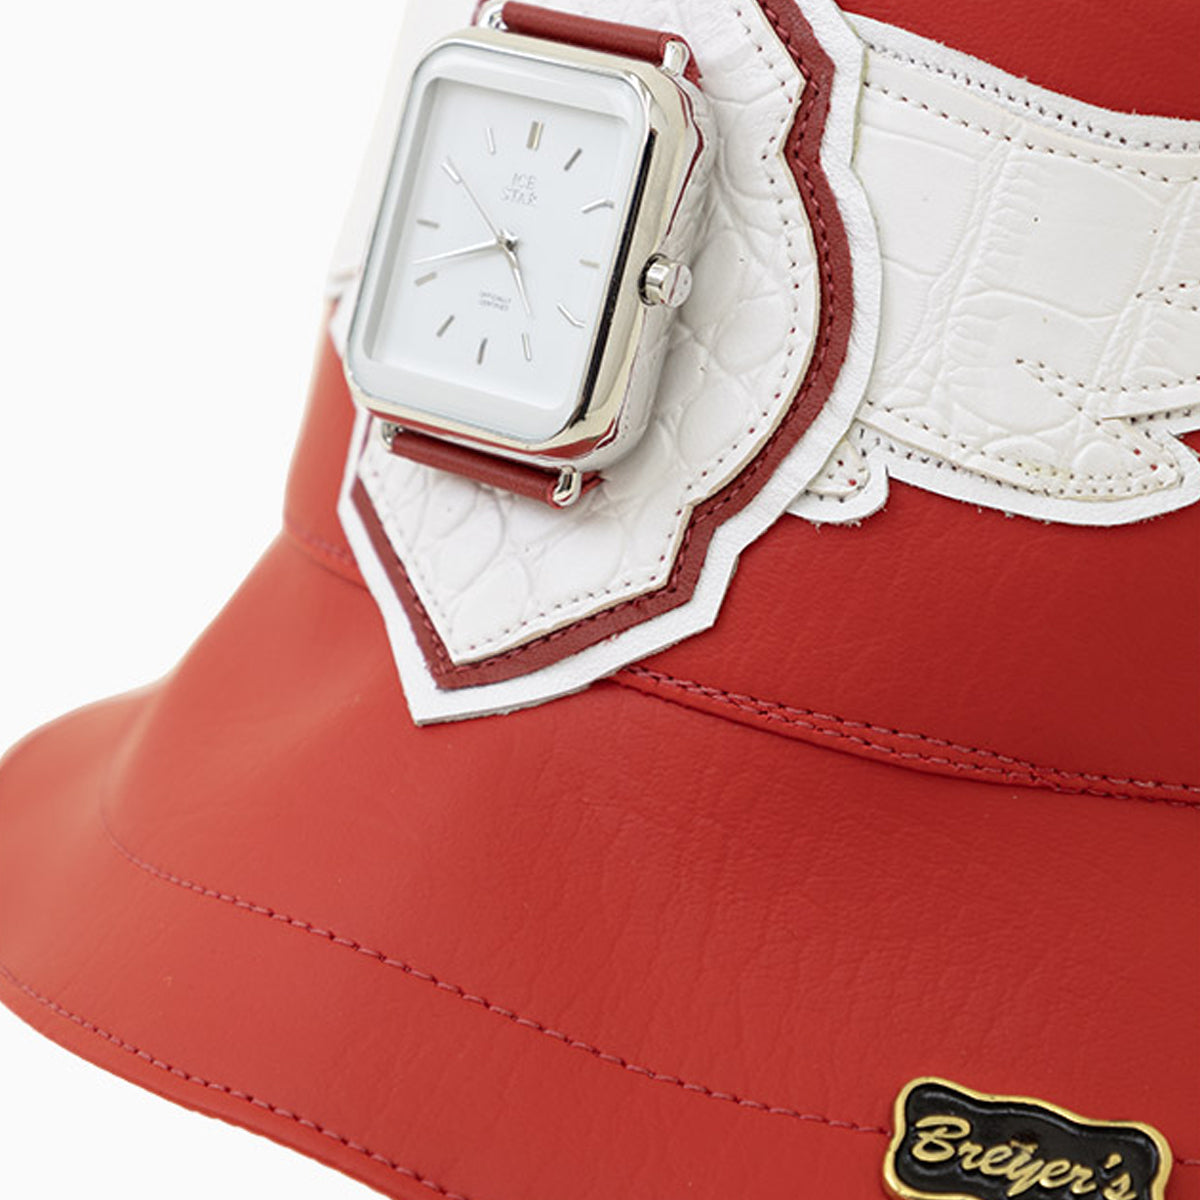 Breyer's Buck 50 Bucket Leather Watch  Hat